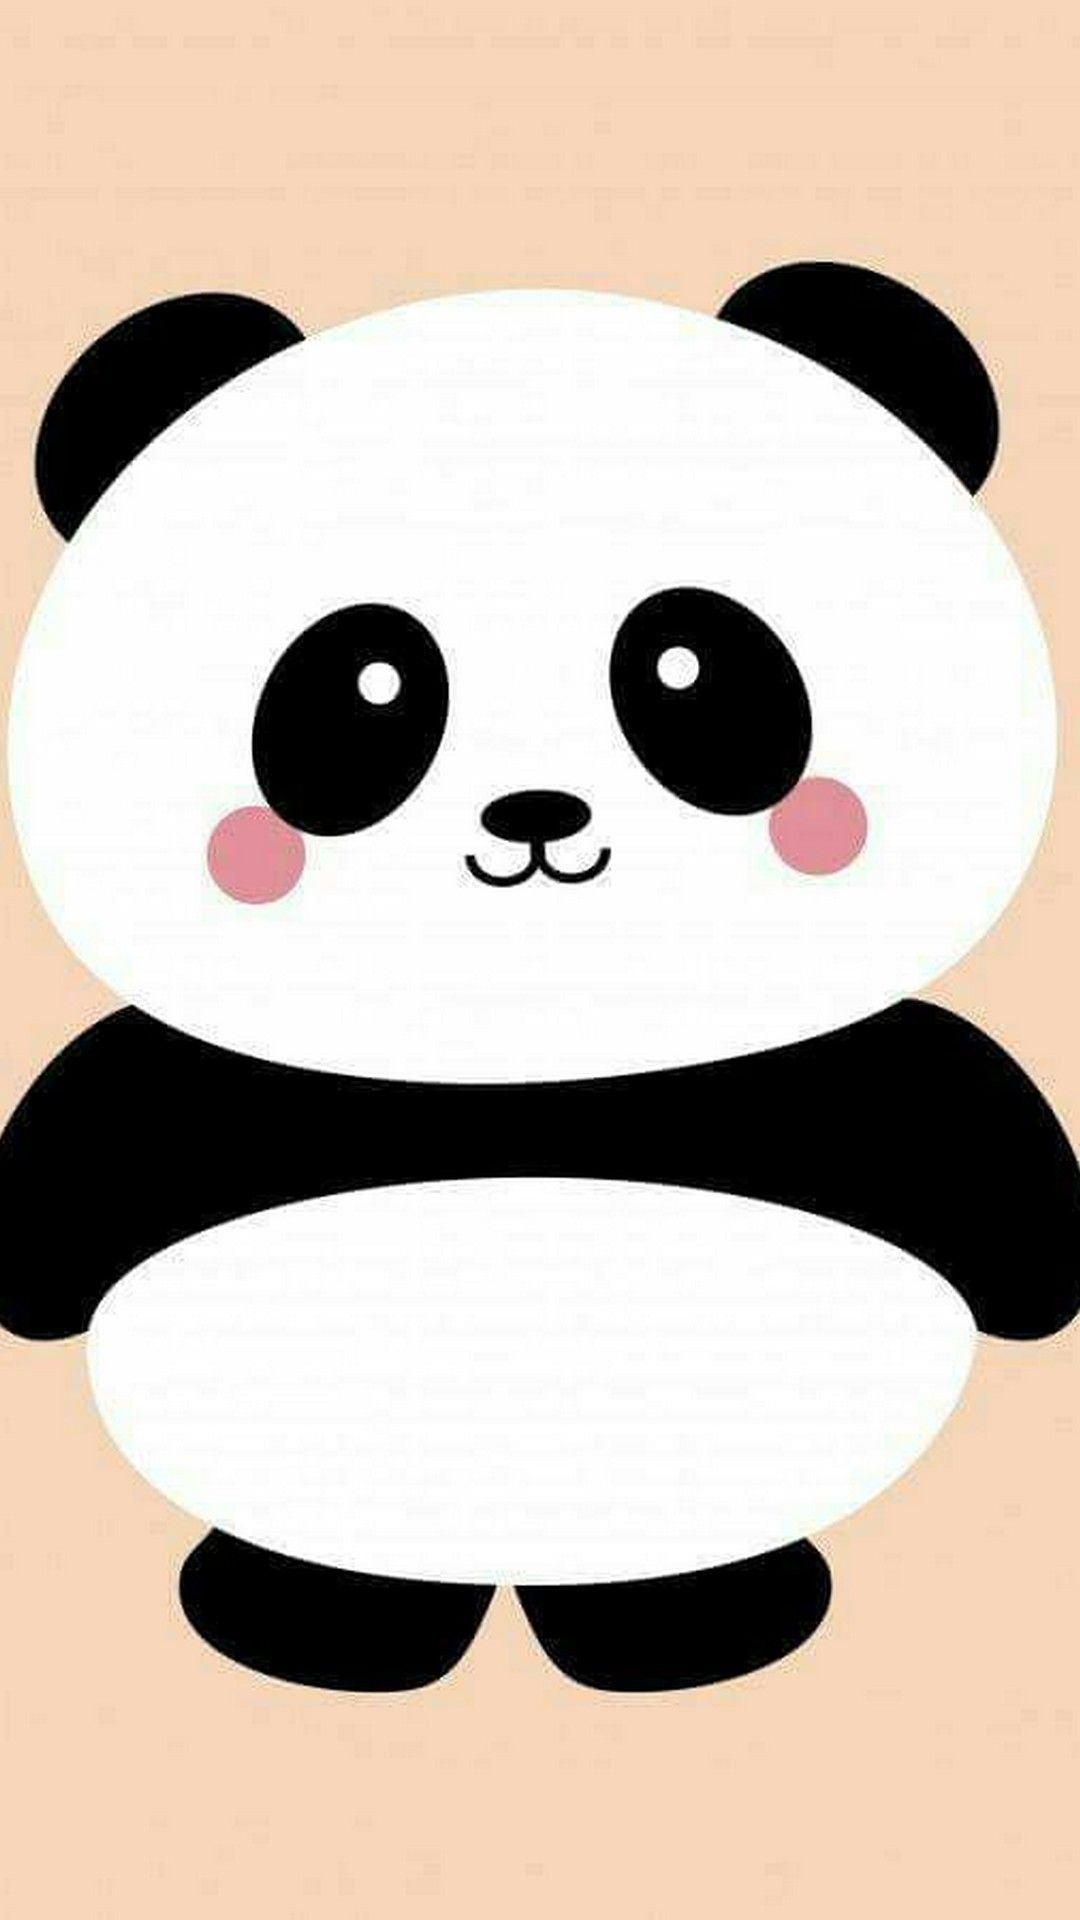 Tải xuống APK Cute Anime Panda Wallpaper cho Android